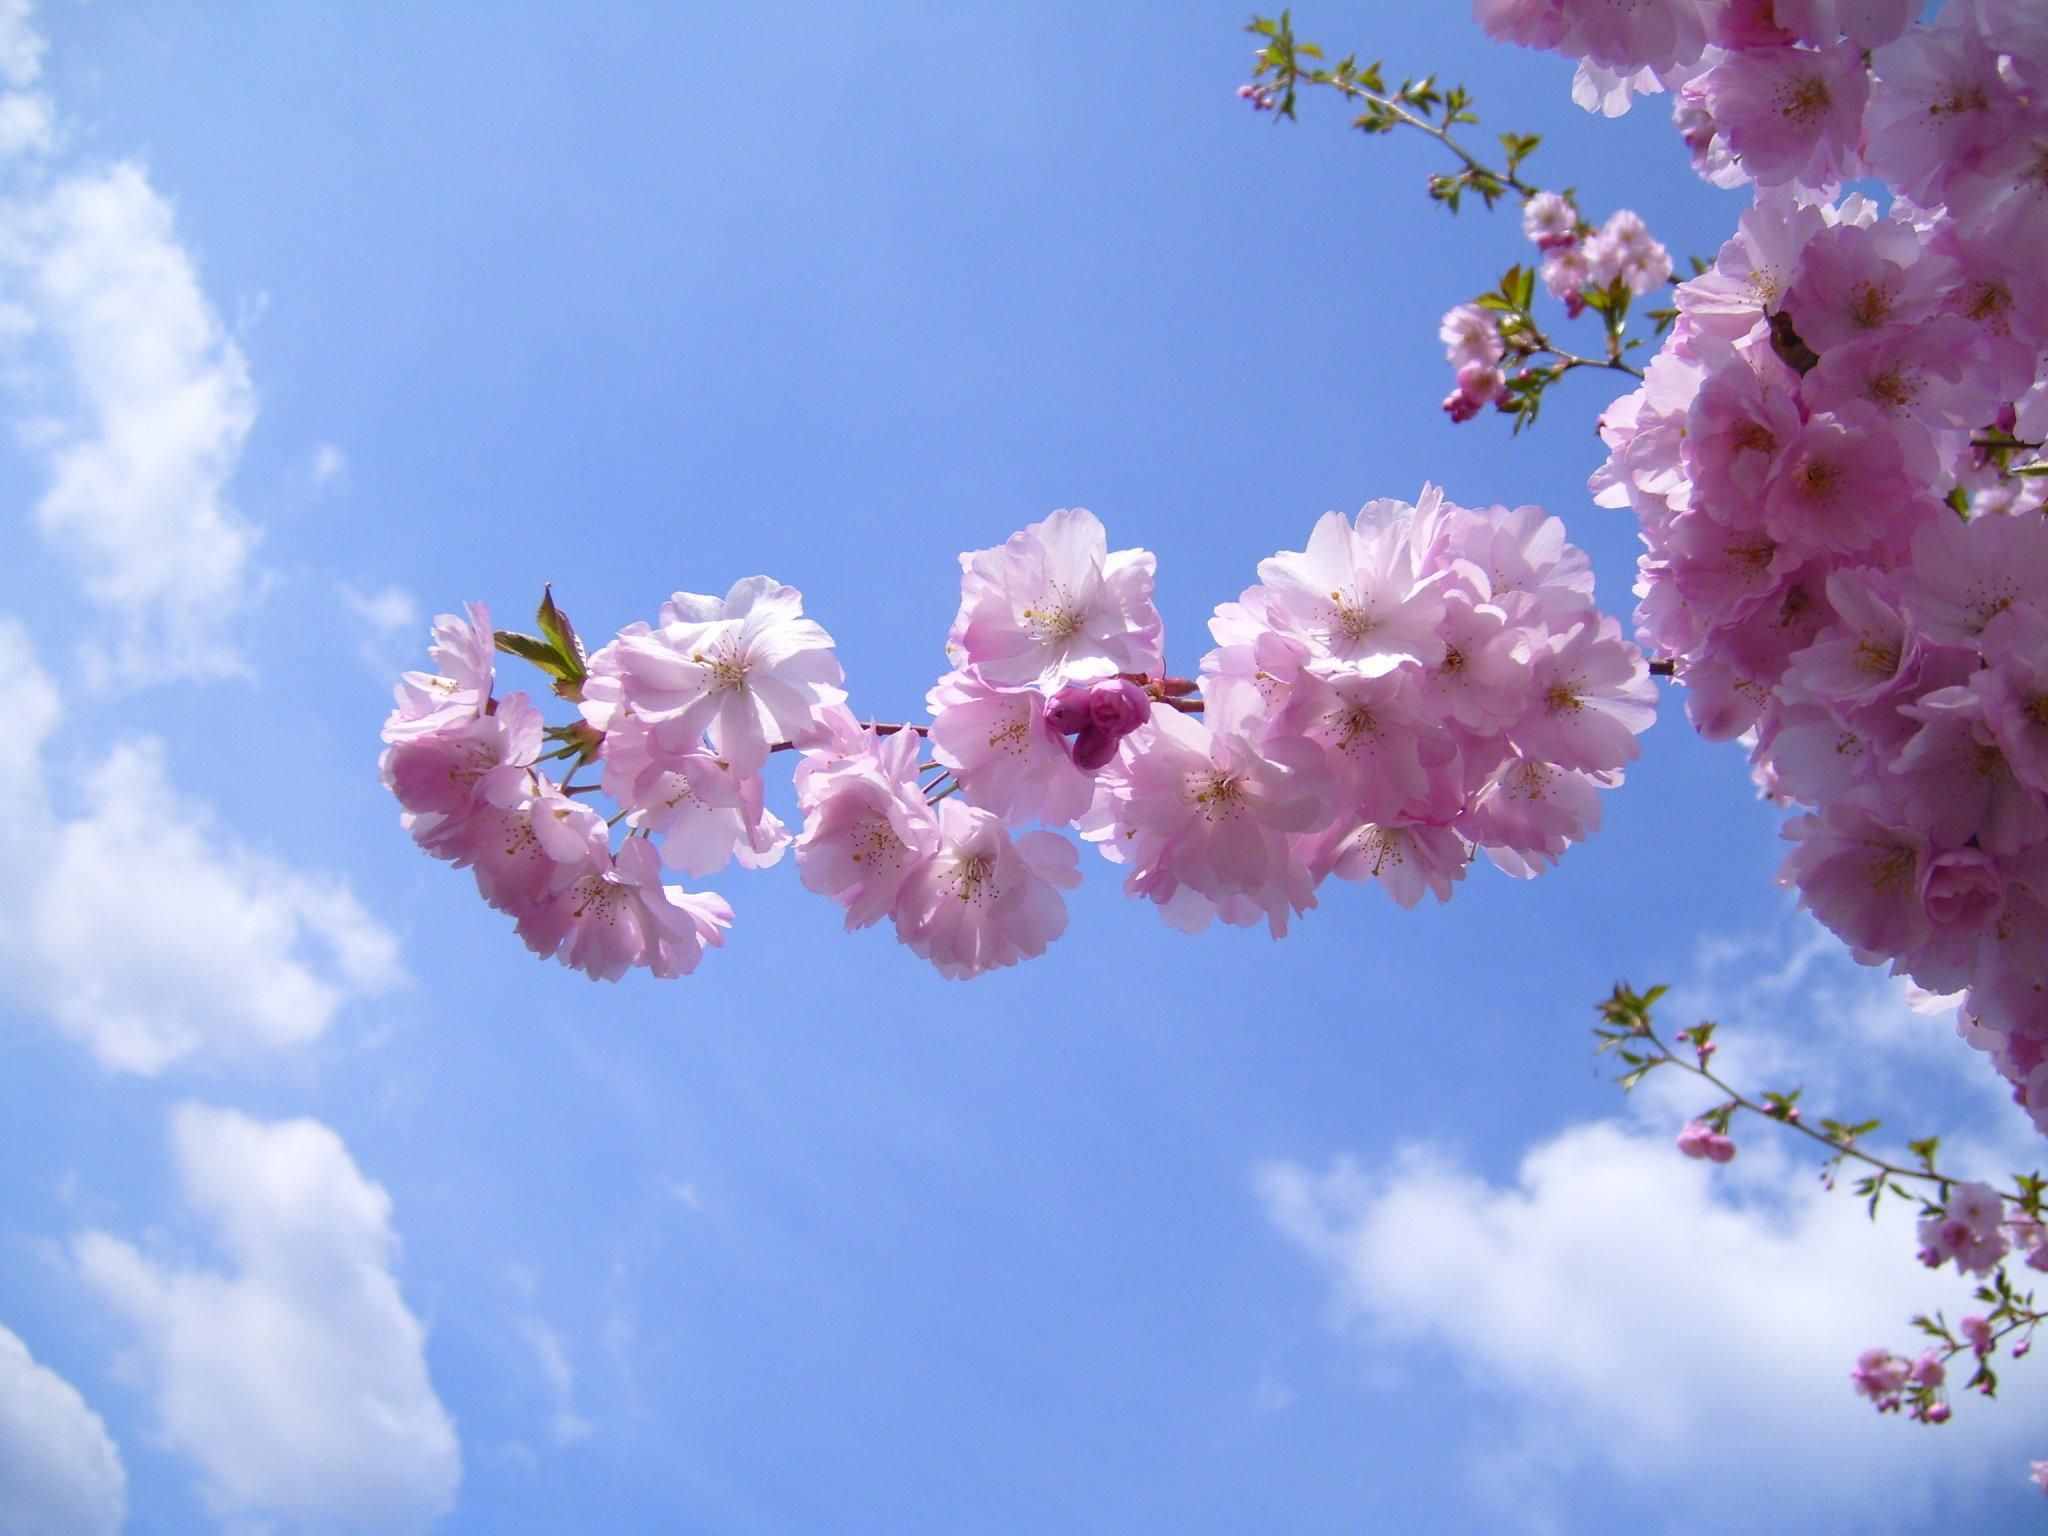 File:Flowering cherry flowers.jpg - Wikimedia Commons